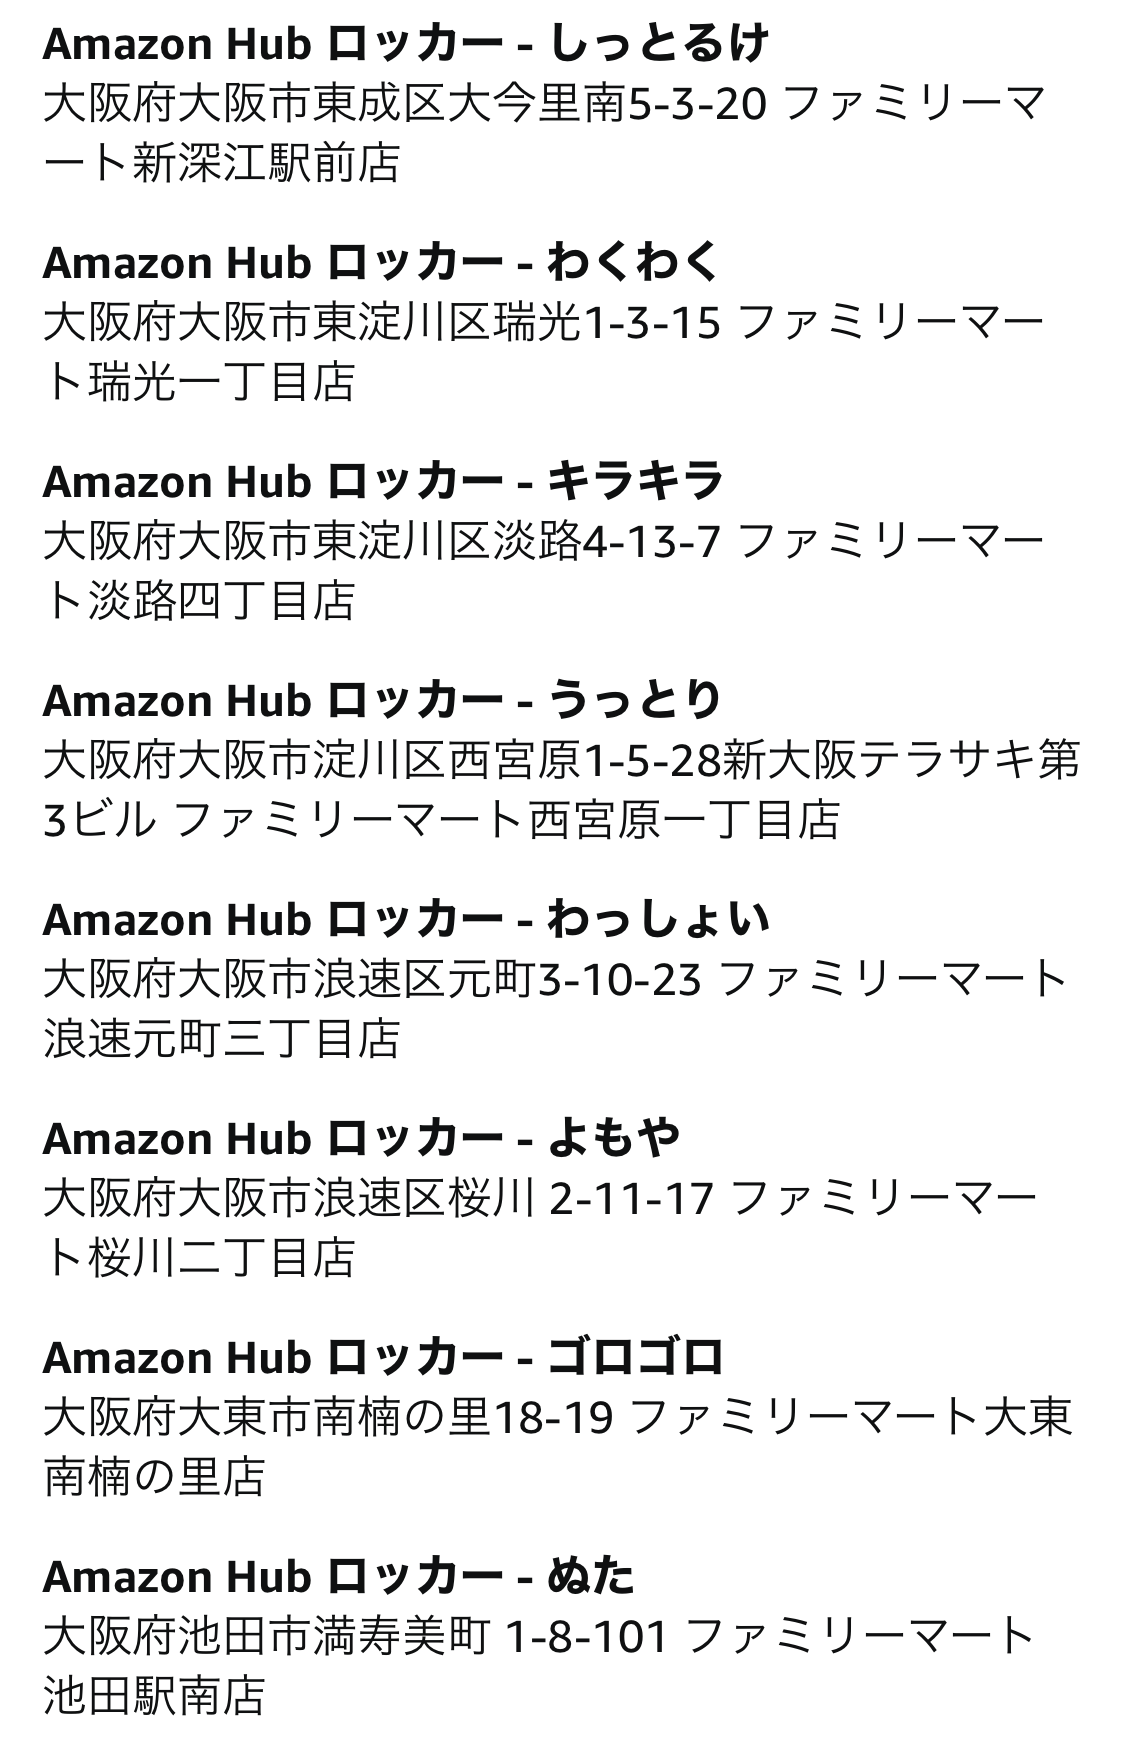 AmazonLocker AmazonHub 04